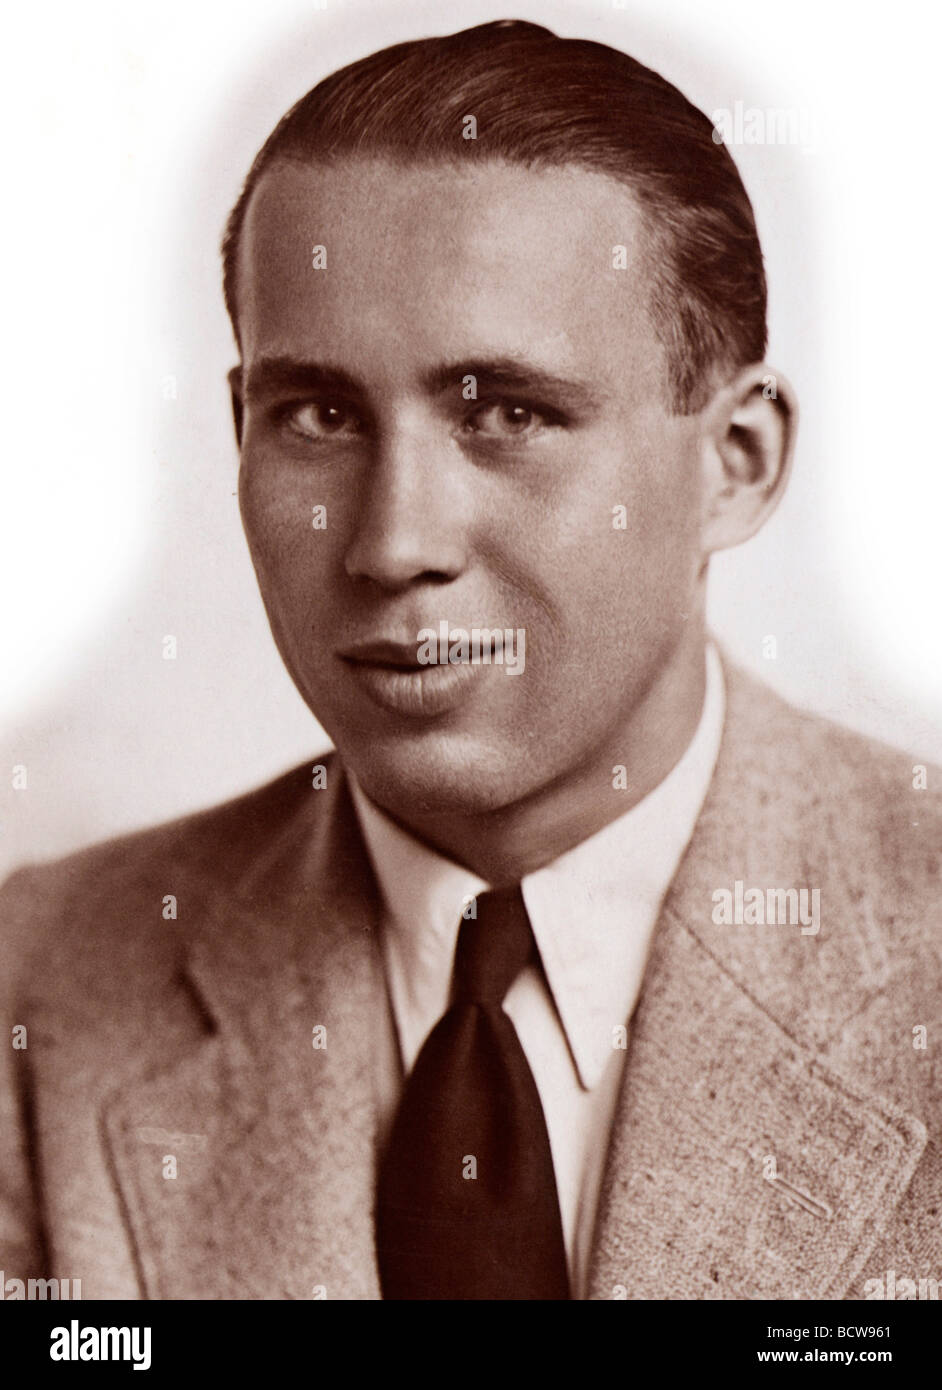 Men's portrait, historical photo around 1935 Stock Photo